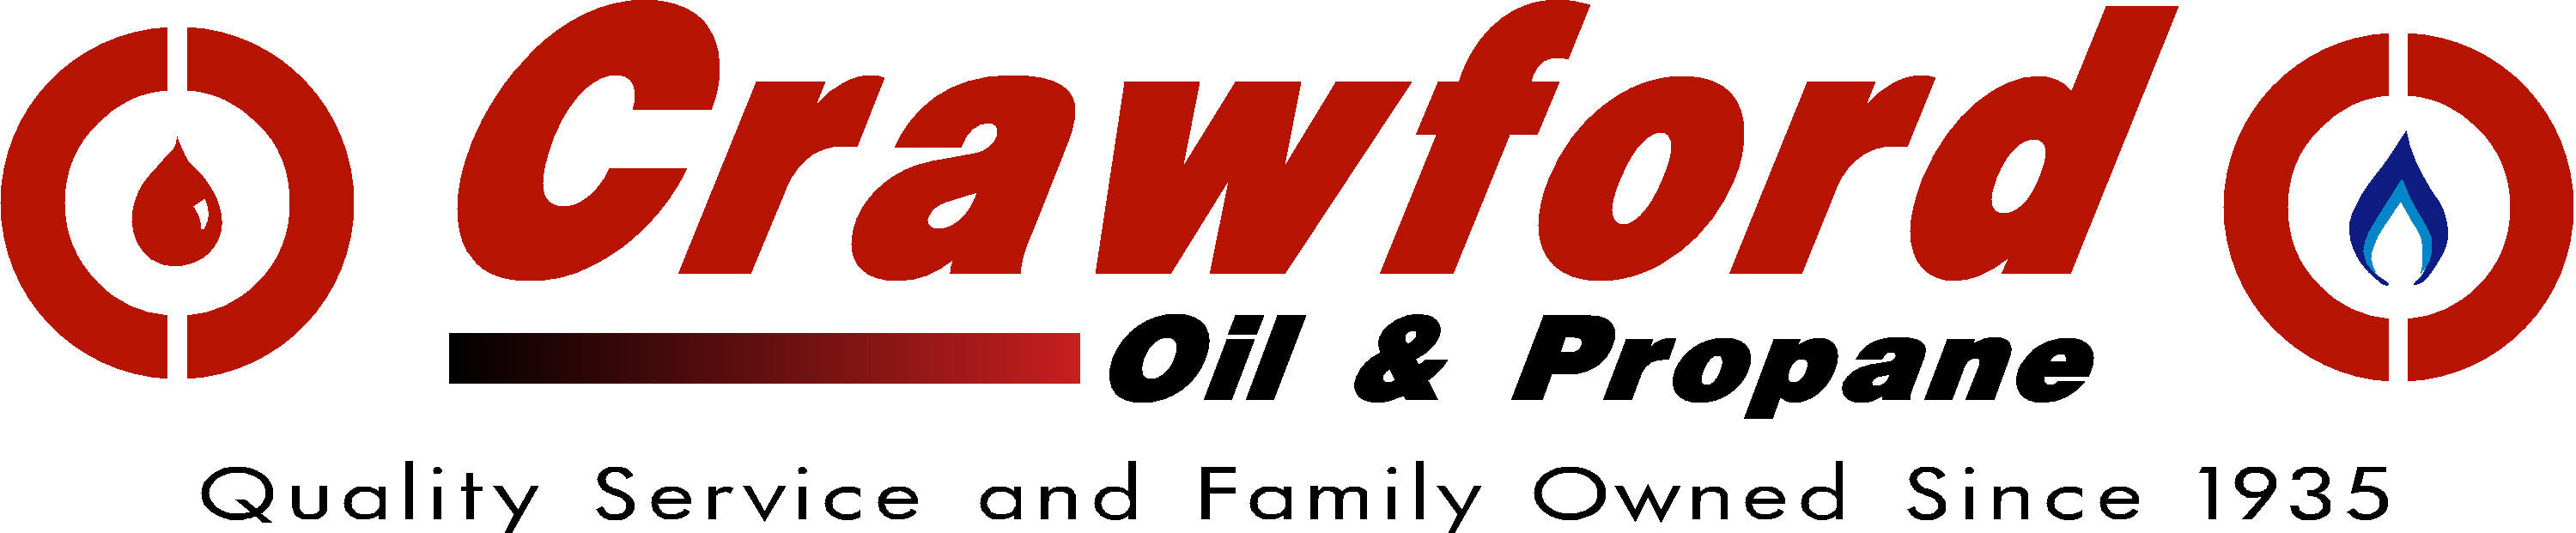 Crawford Oil and Propane